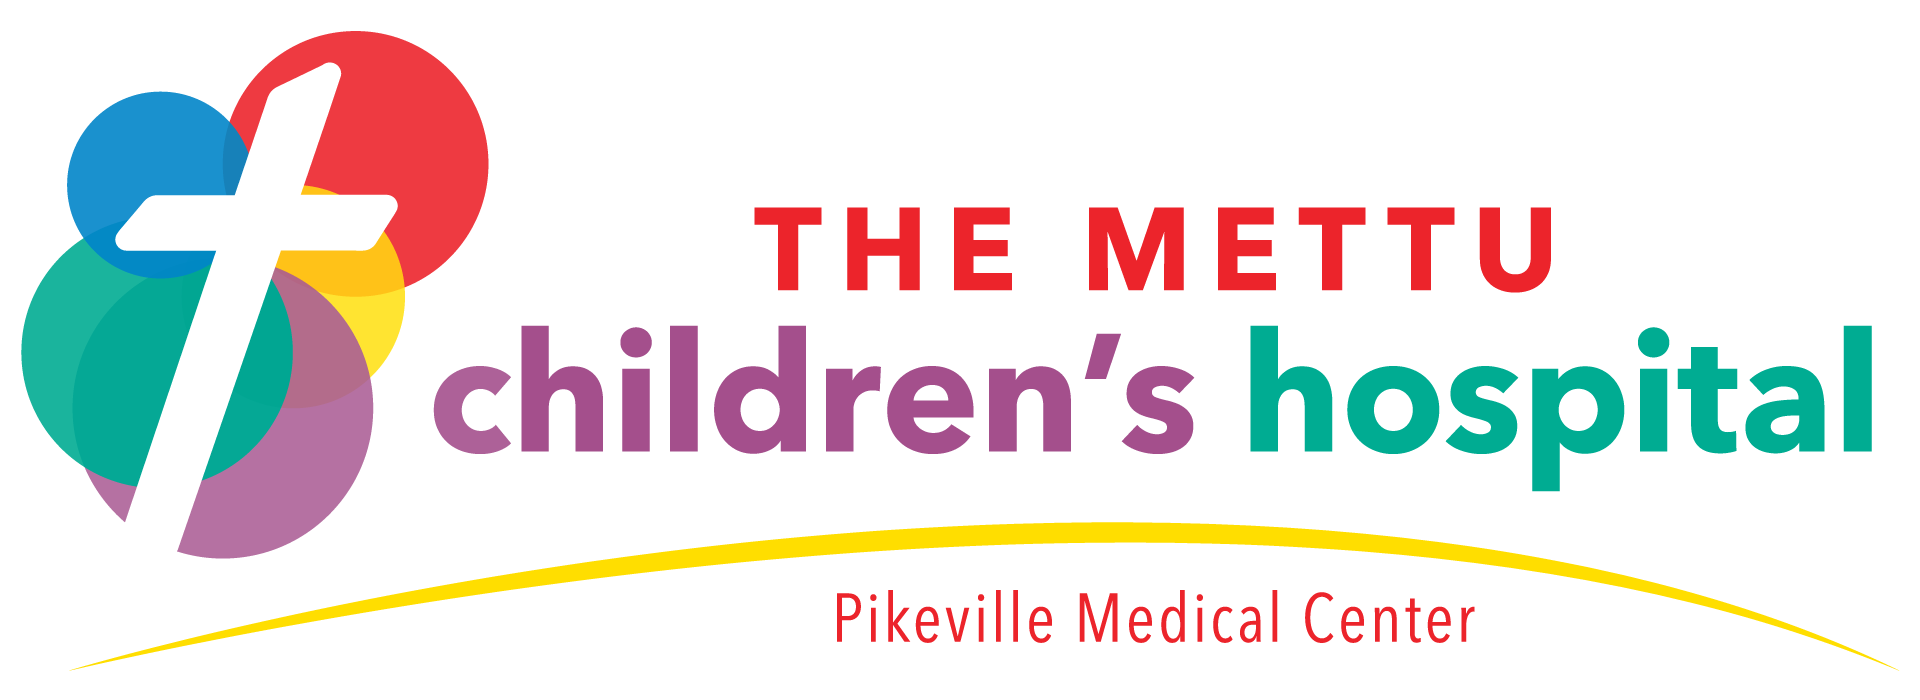 Mettu Children's Hospital Logo